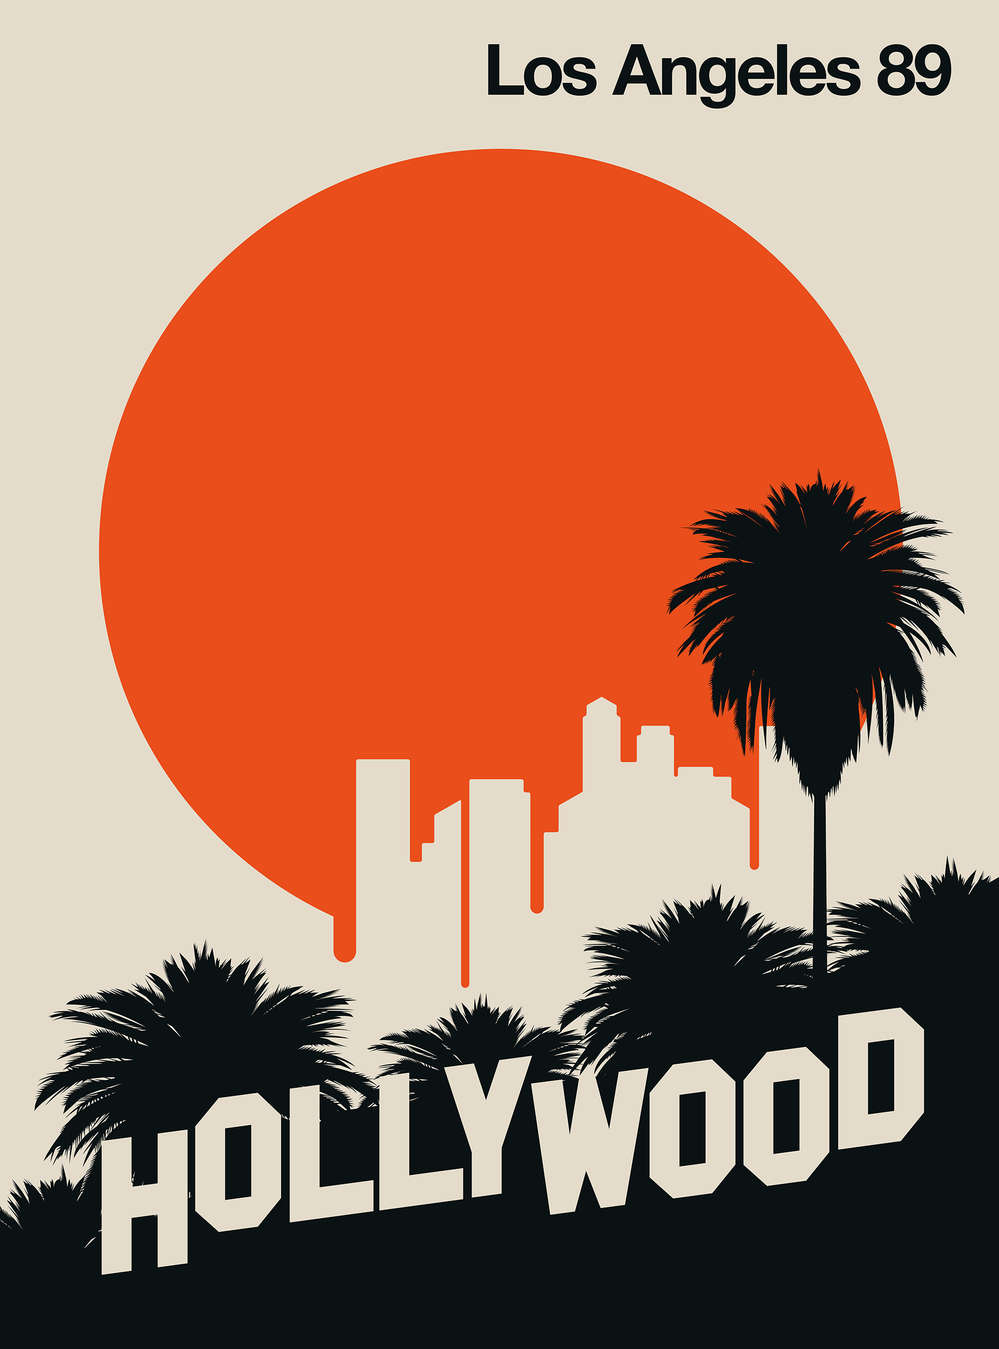             Fototapete Hollywood im Retro Poster Look
        